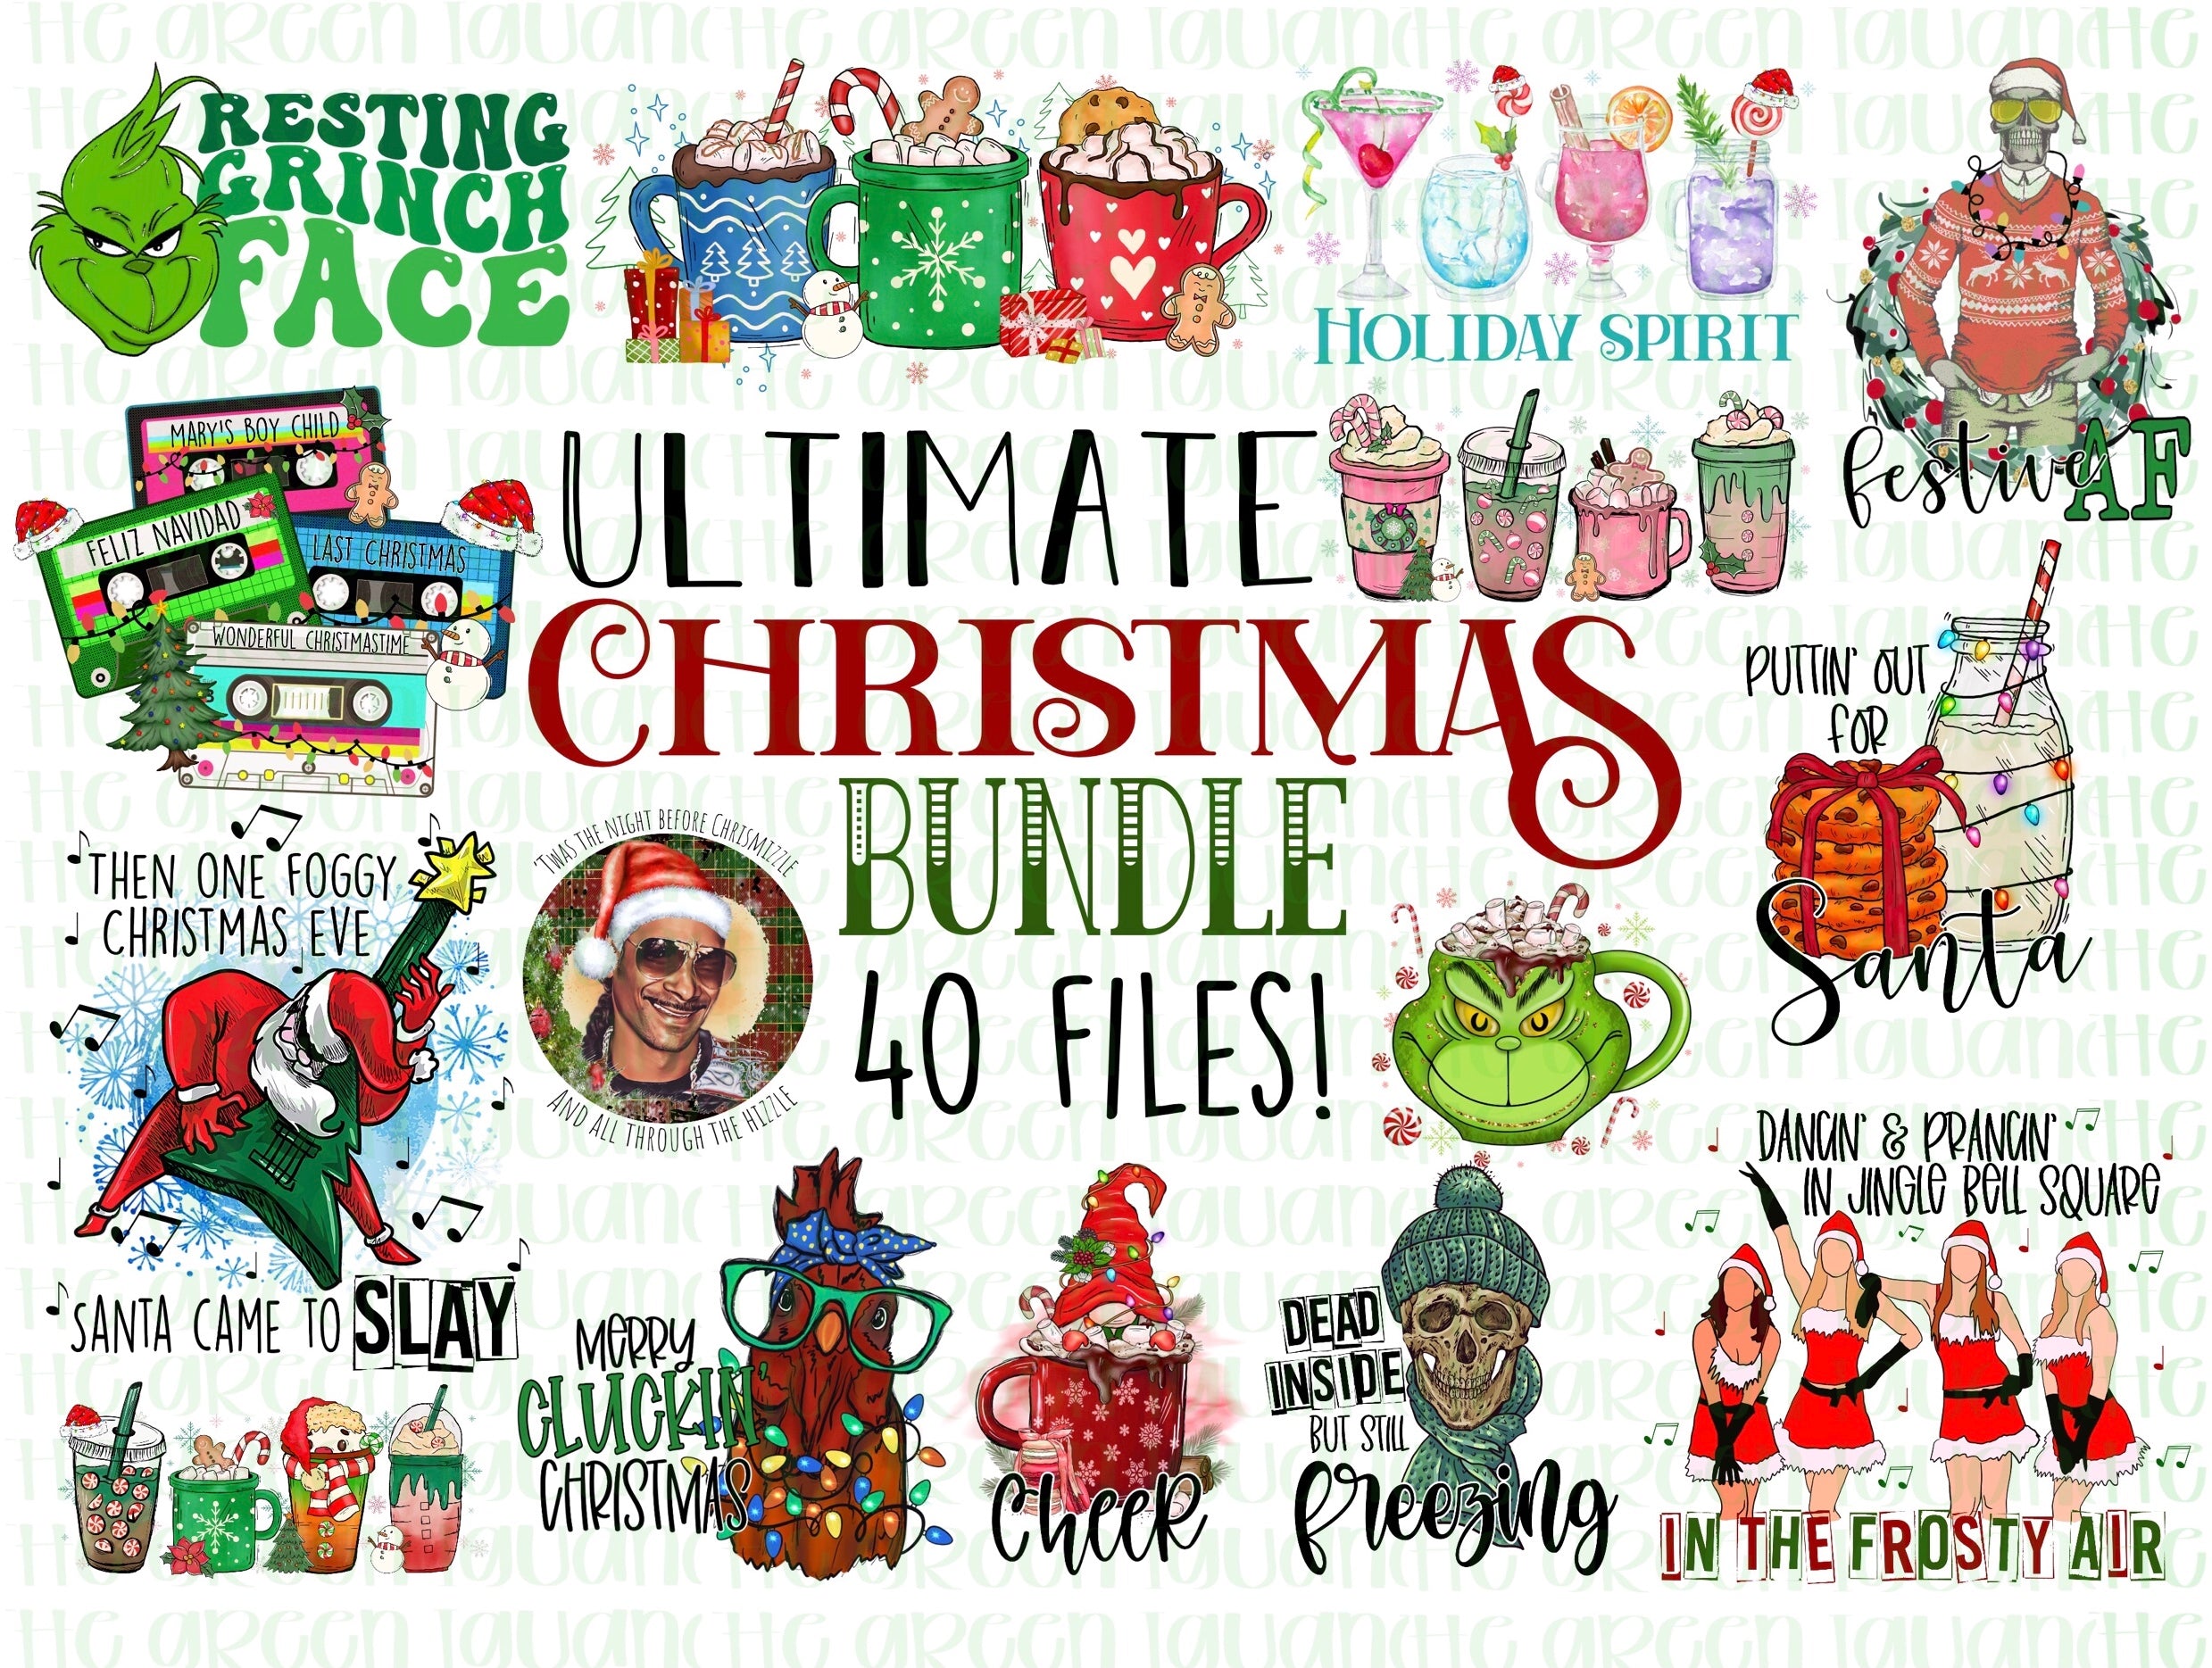 Ultimate Christmas DIGITAL Bundle - 40 files!